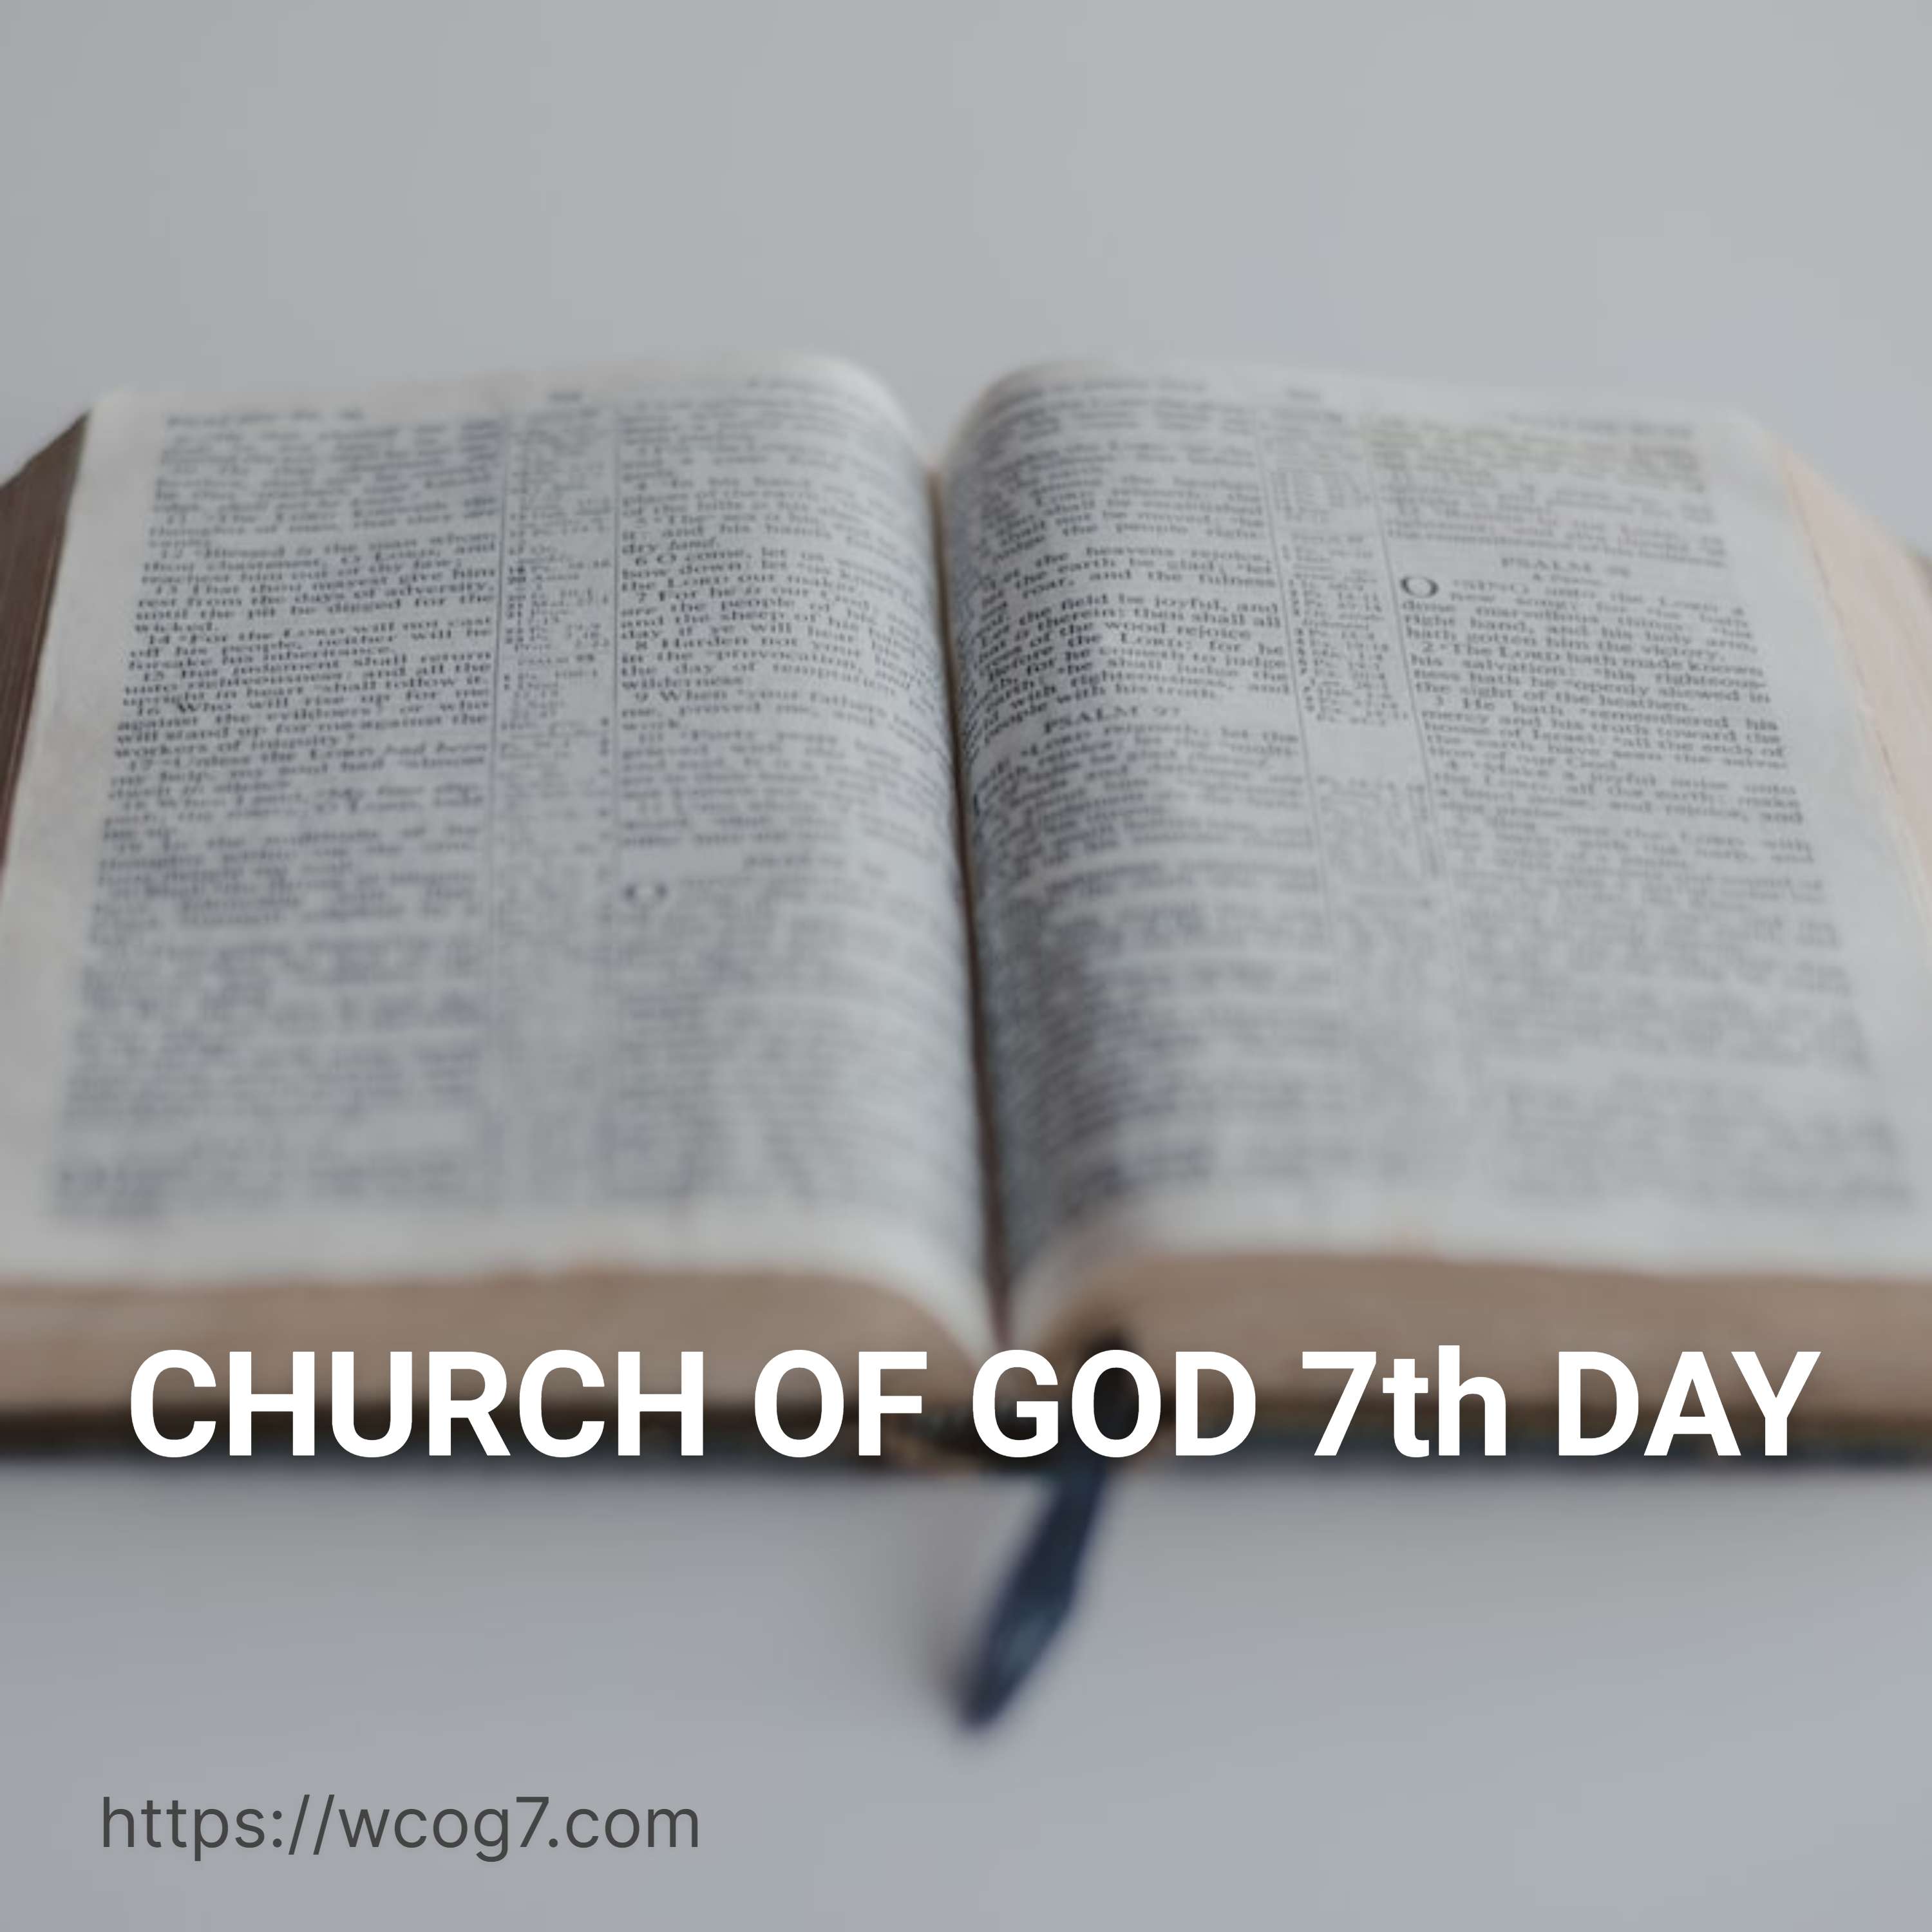 Church of God 7th Day